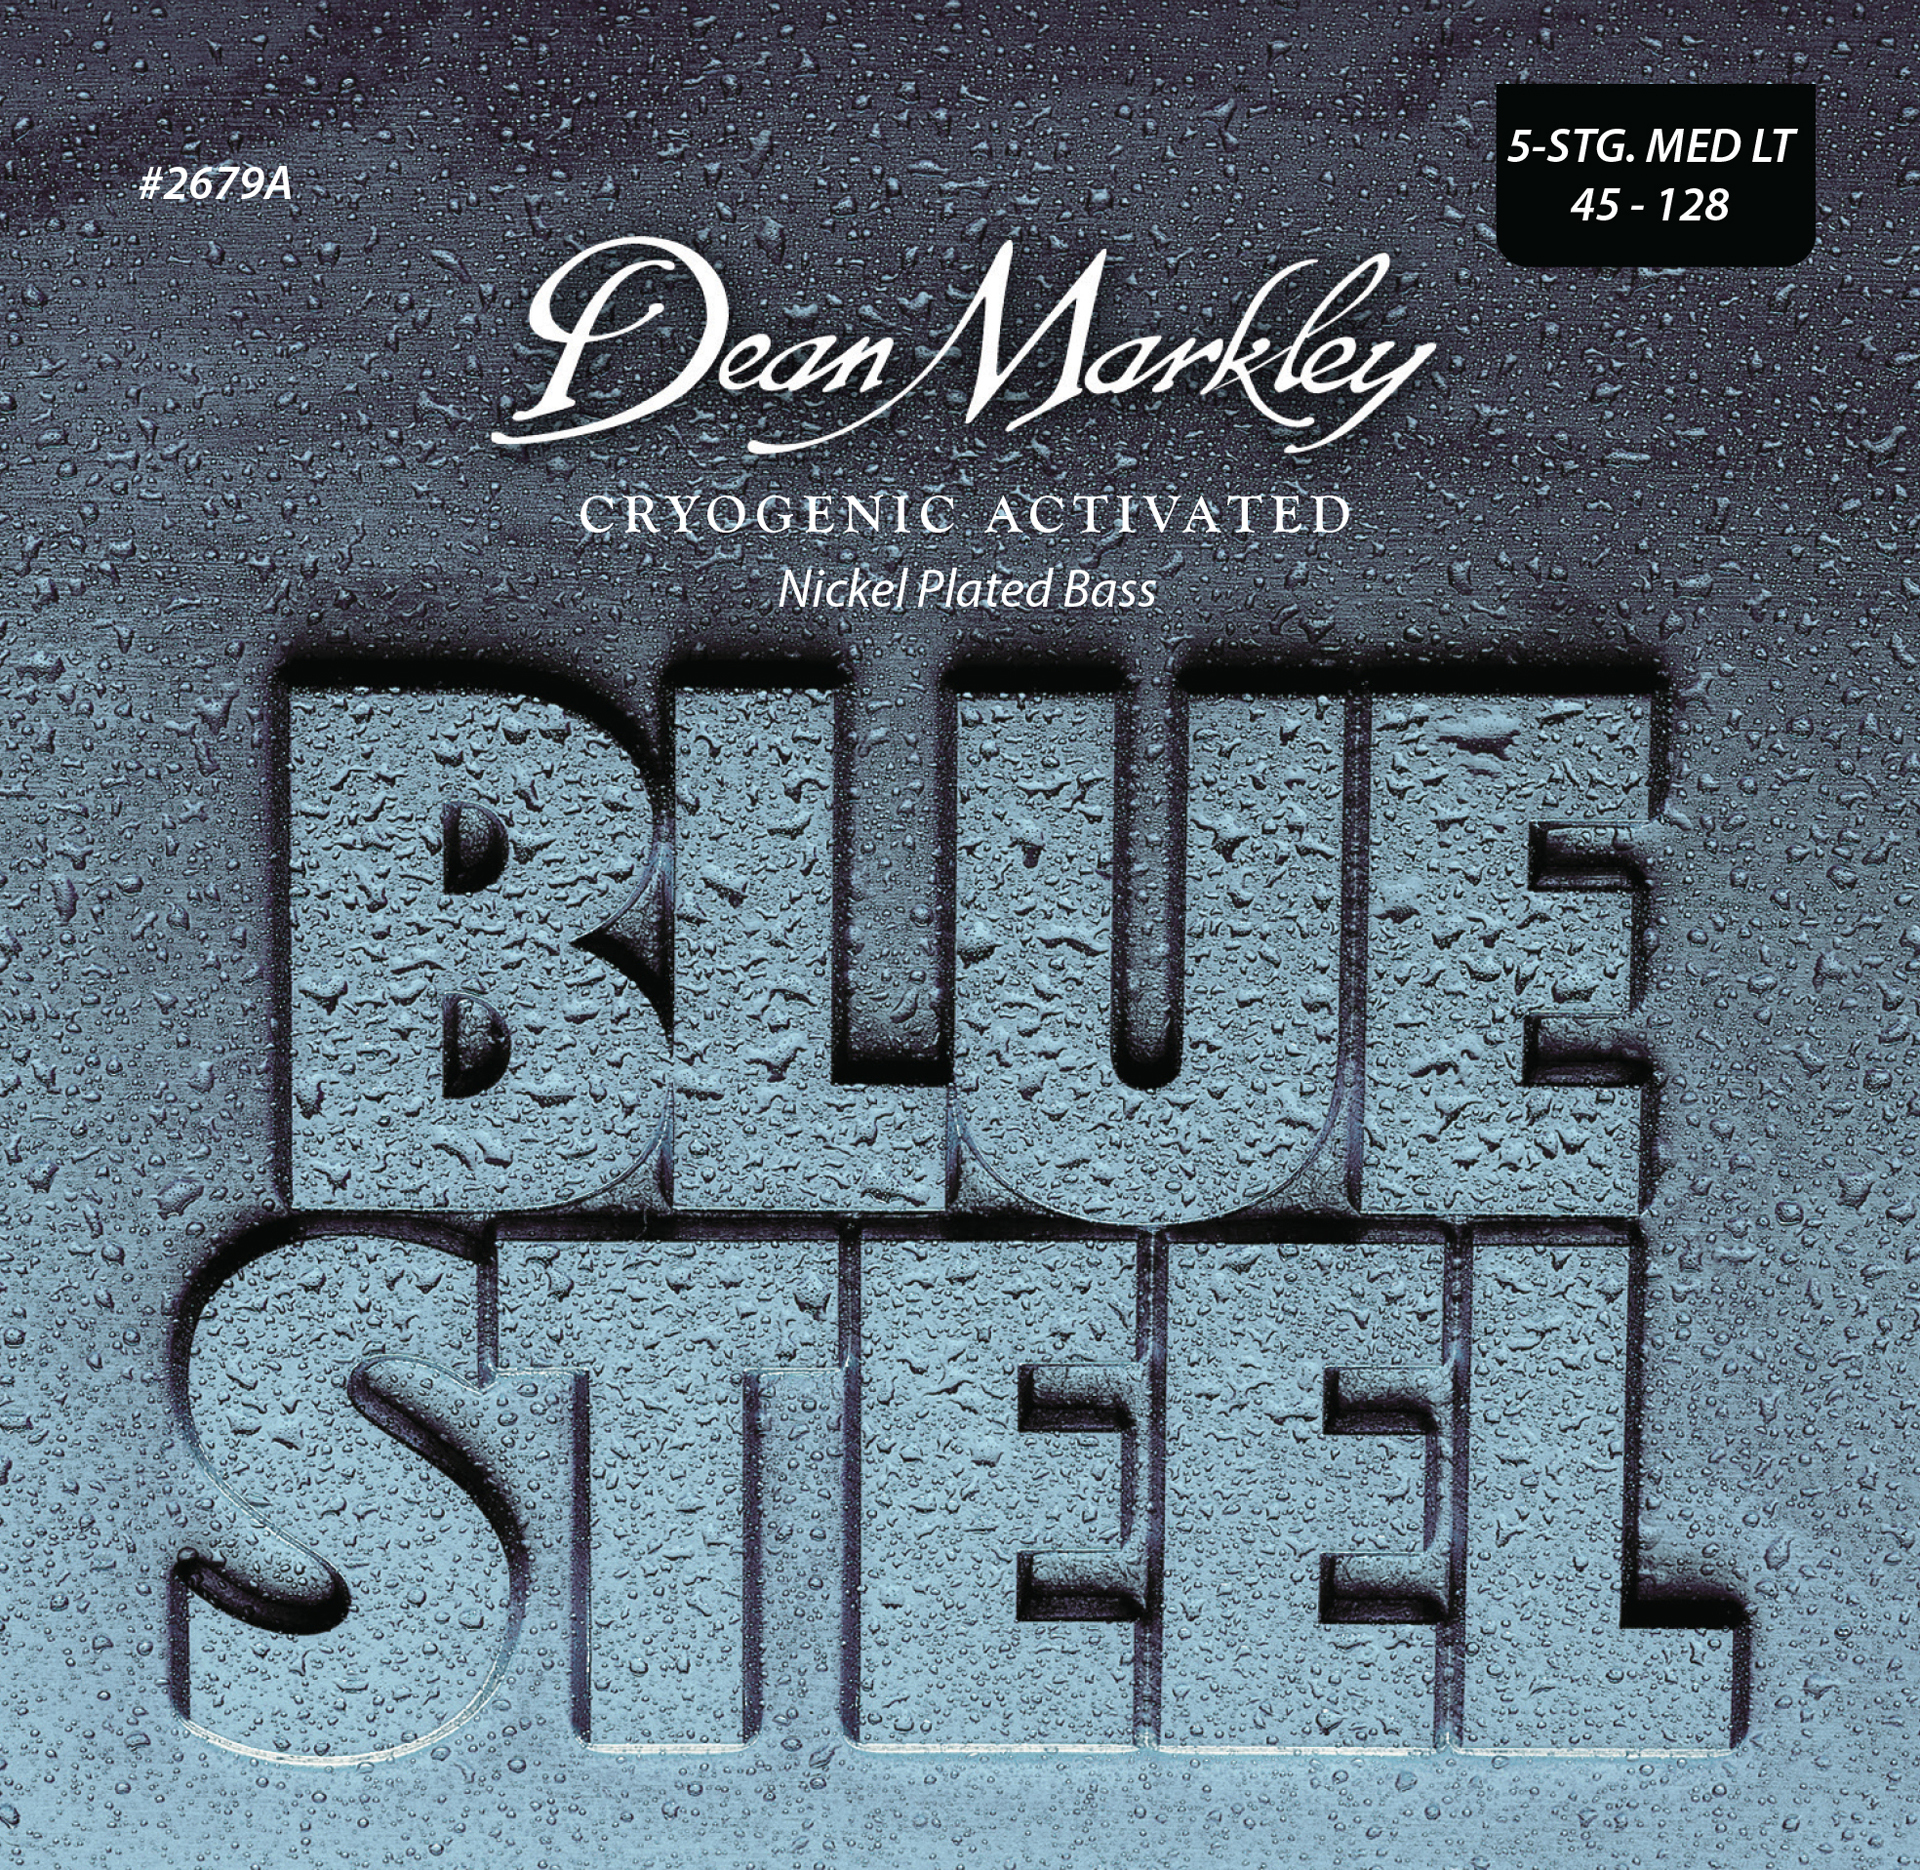 Dean Markley Blue Steel - 2679 A - Electric Bass String Set, Nickel Plated Steel, 5-String, Medium Light, .045-.128